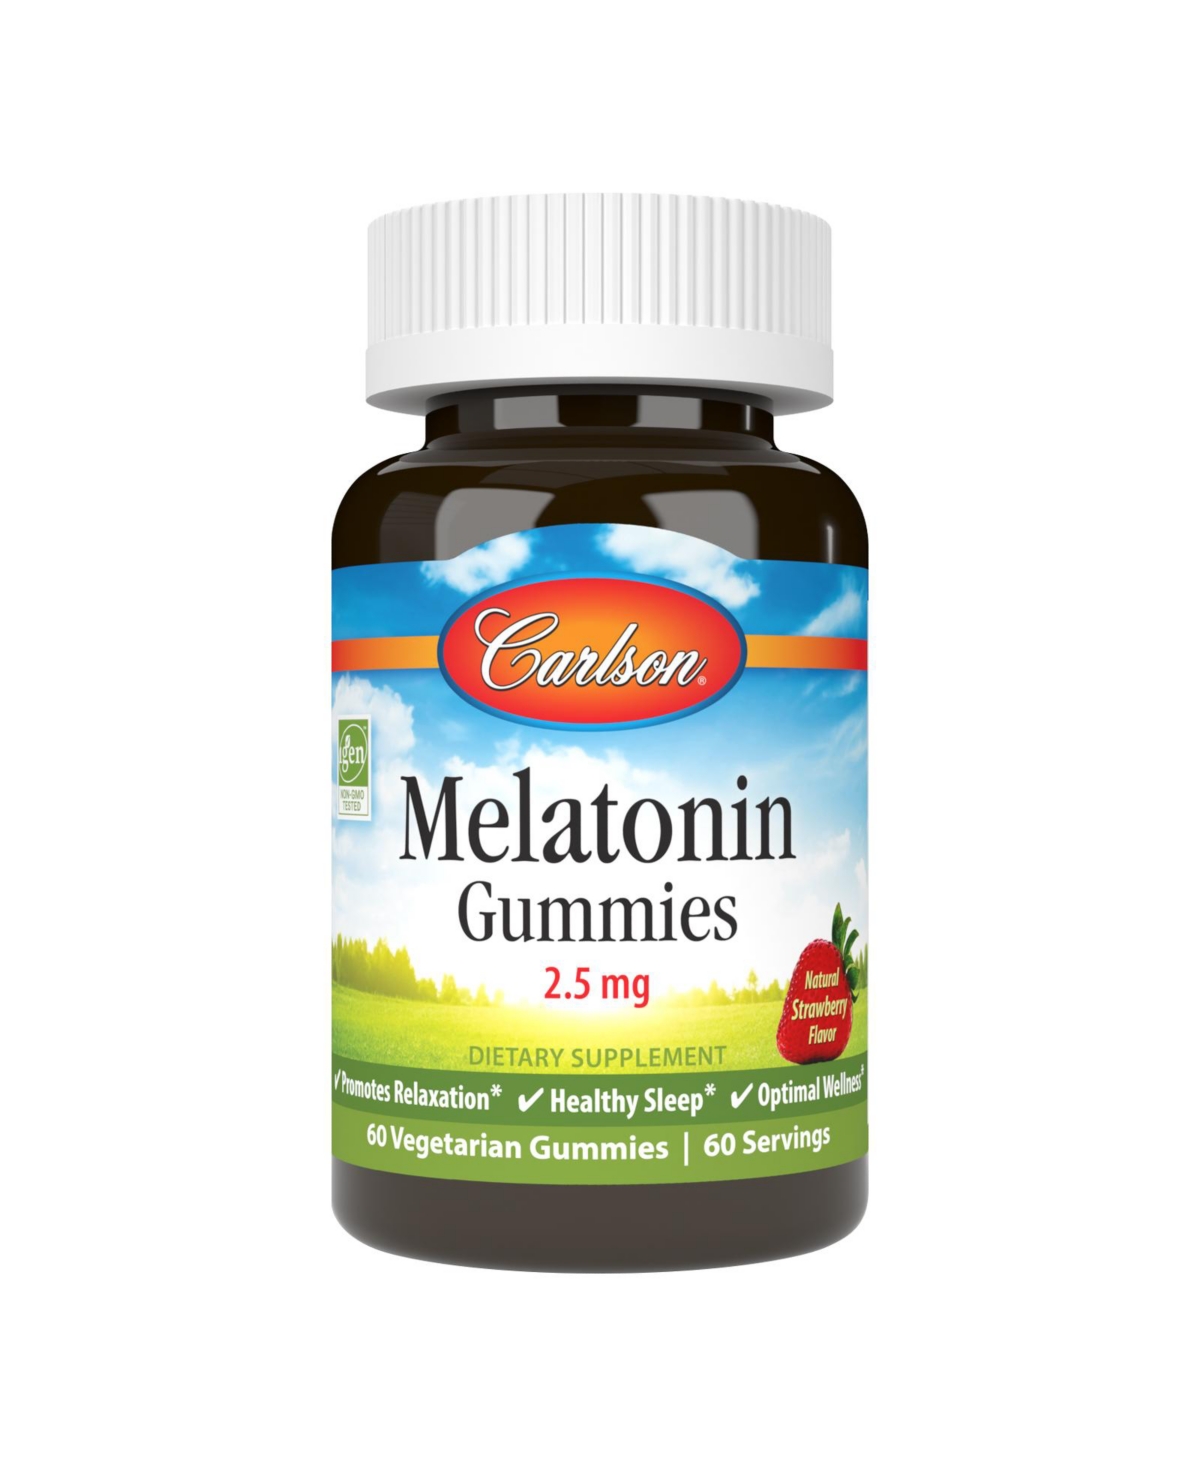 Carlson - Melatonin Gummies, 2.5 mg, Healthy Sleep, Promotes Relaxation, Strawberry, 60 Vegetarian Gummies - Assorted Pre-Pack